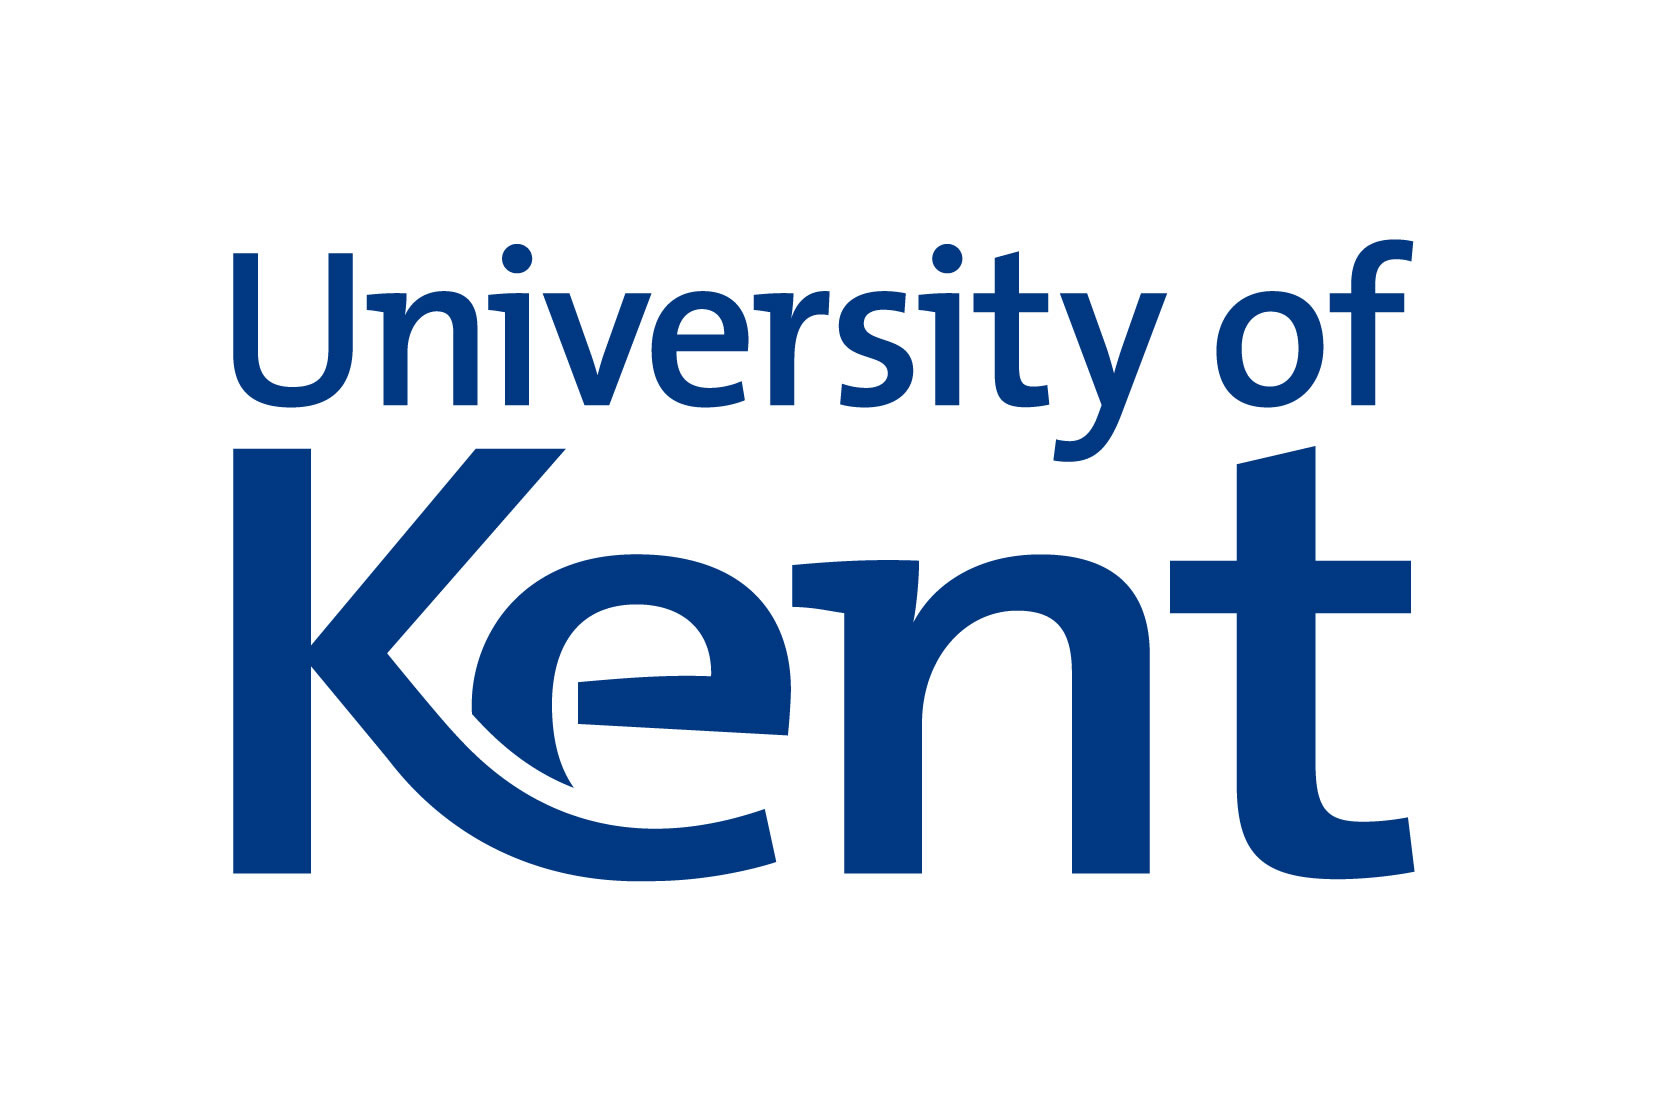 The University of Kent Logo